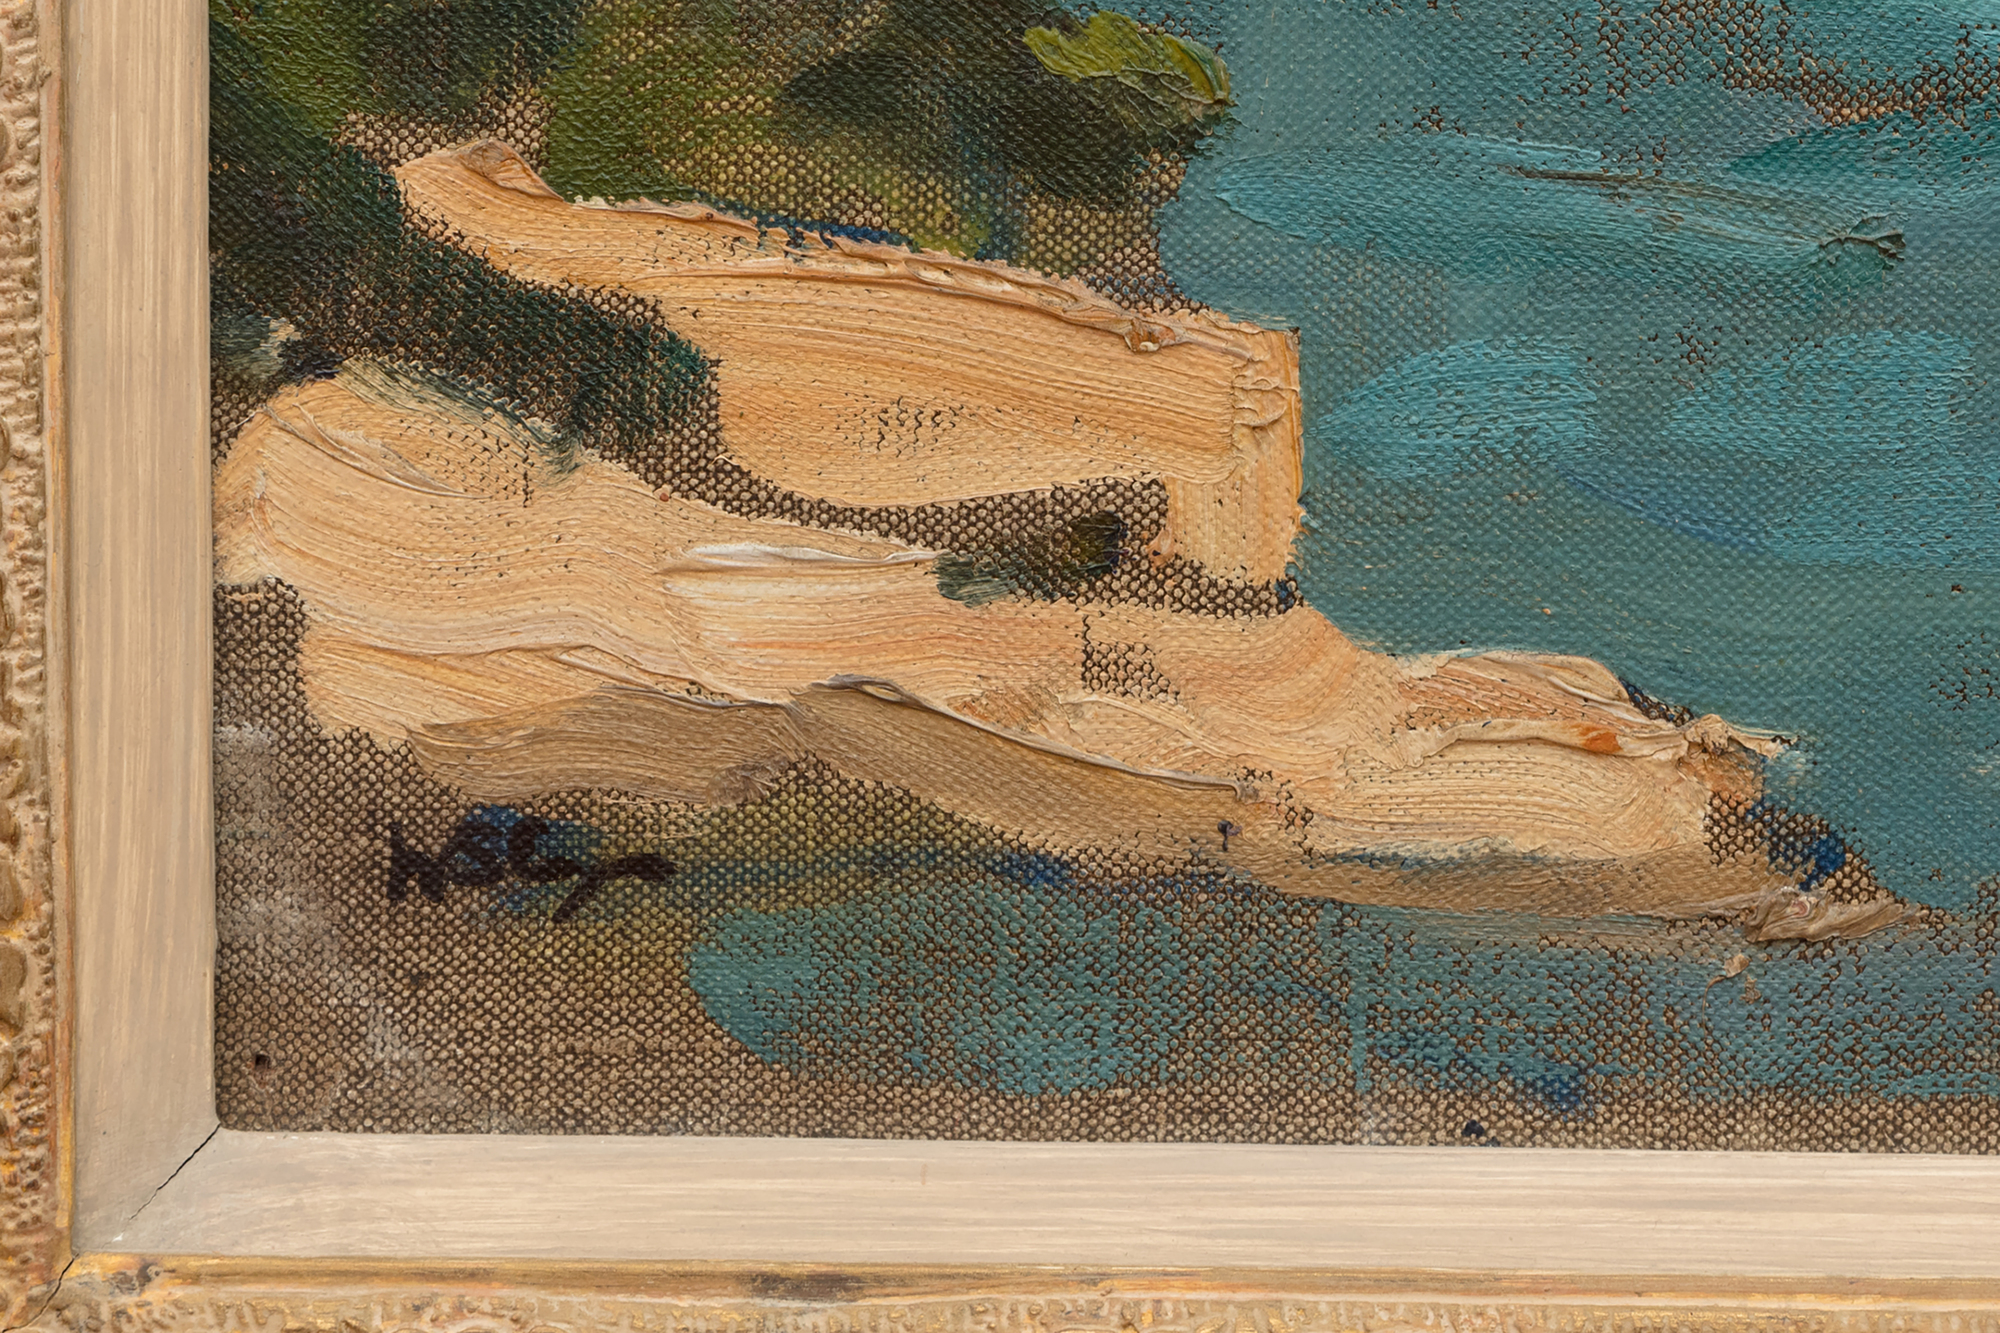 SIR WINSTON CHURCHILL - View Over Cassis Port (C 333) - 油画 - 25 x 30 英寸。